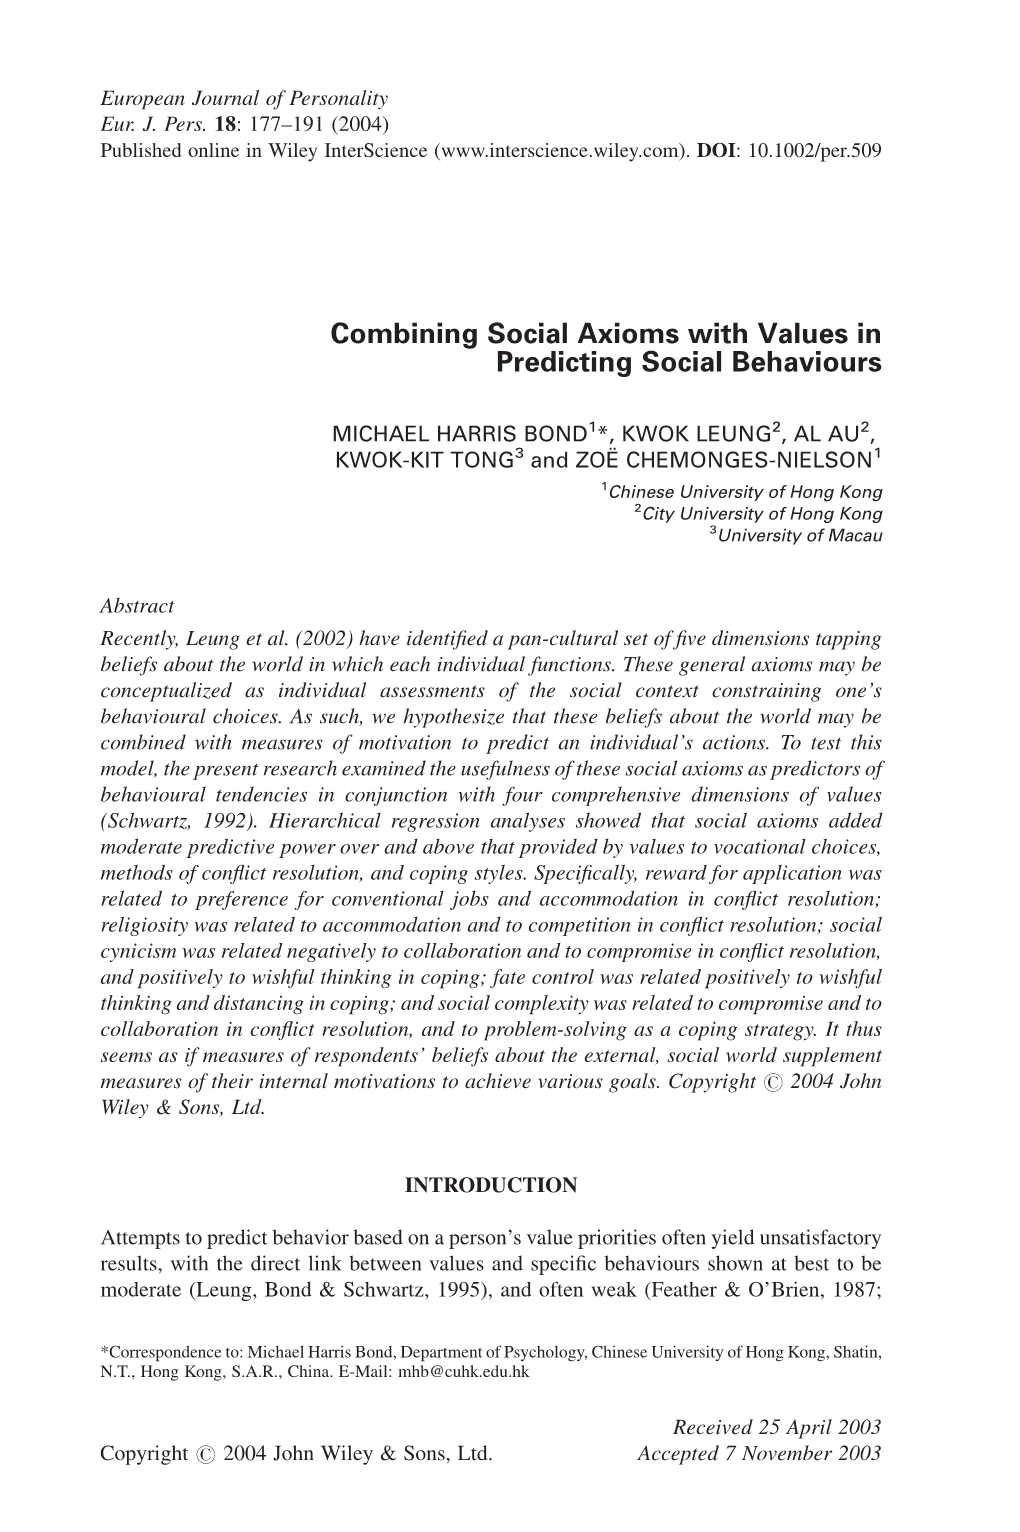 Combining Social Axioms with Values in Predicting Social Behaviours